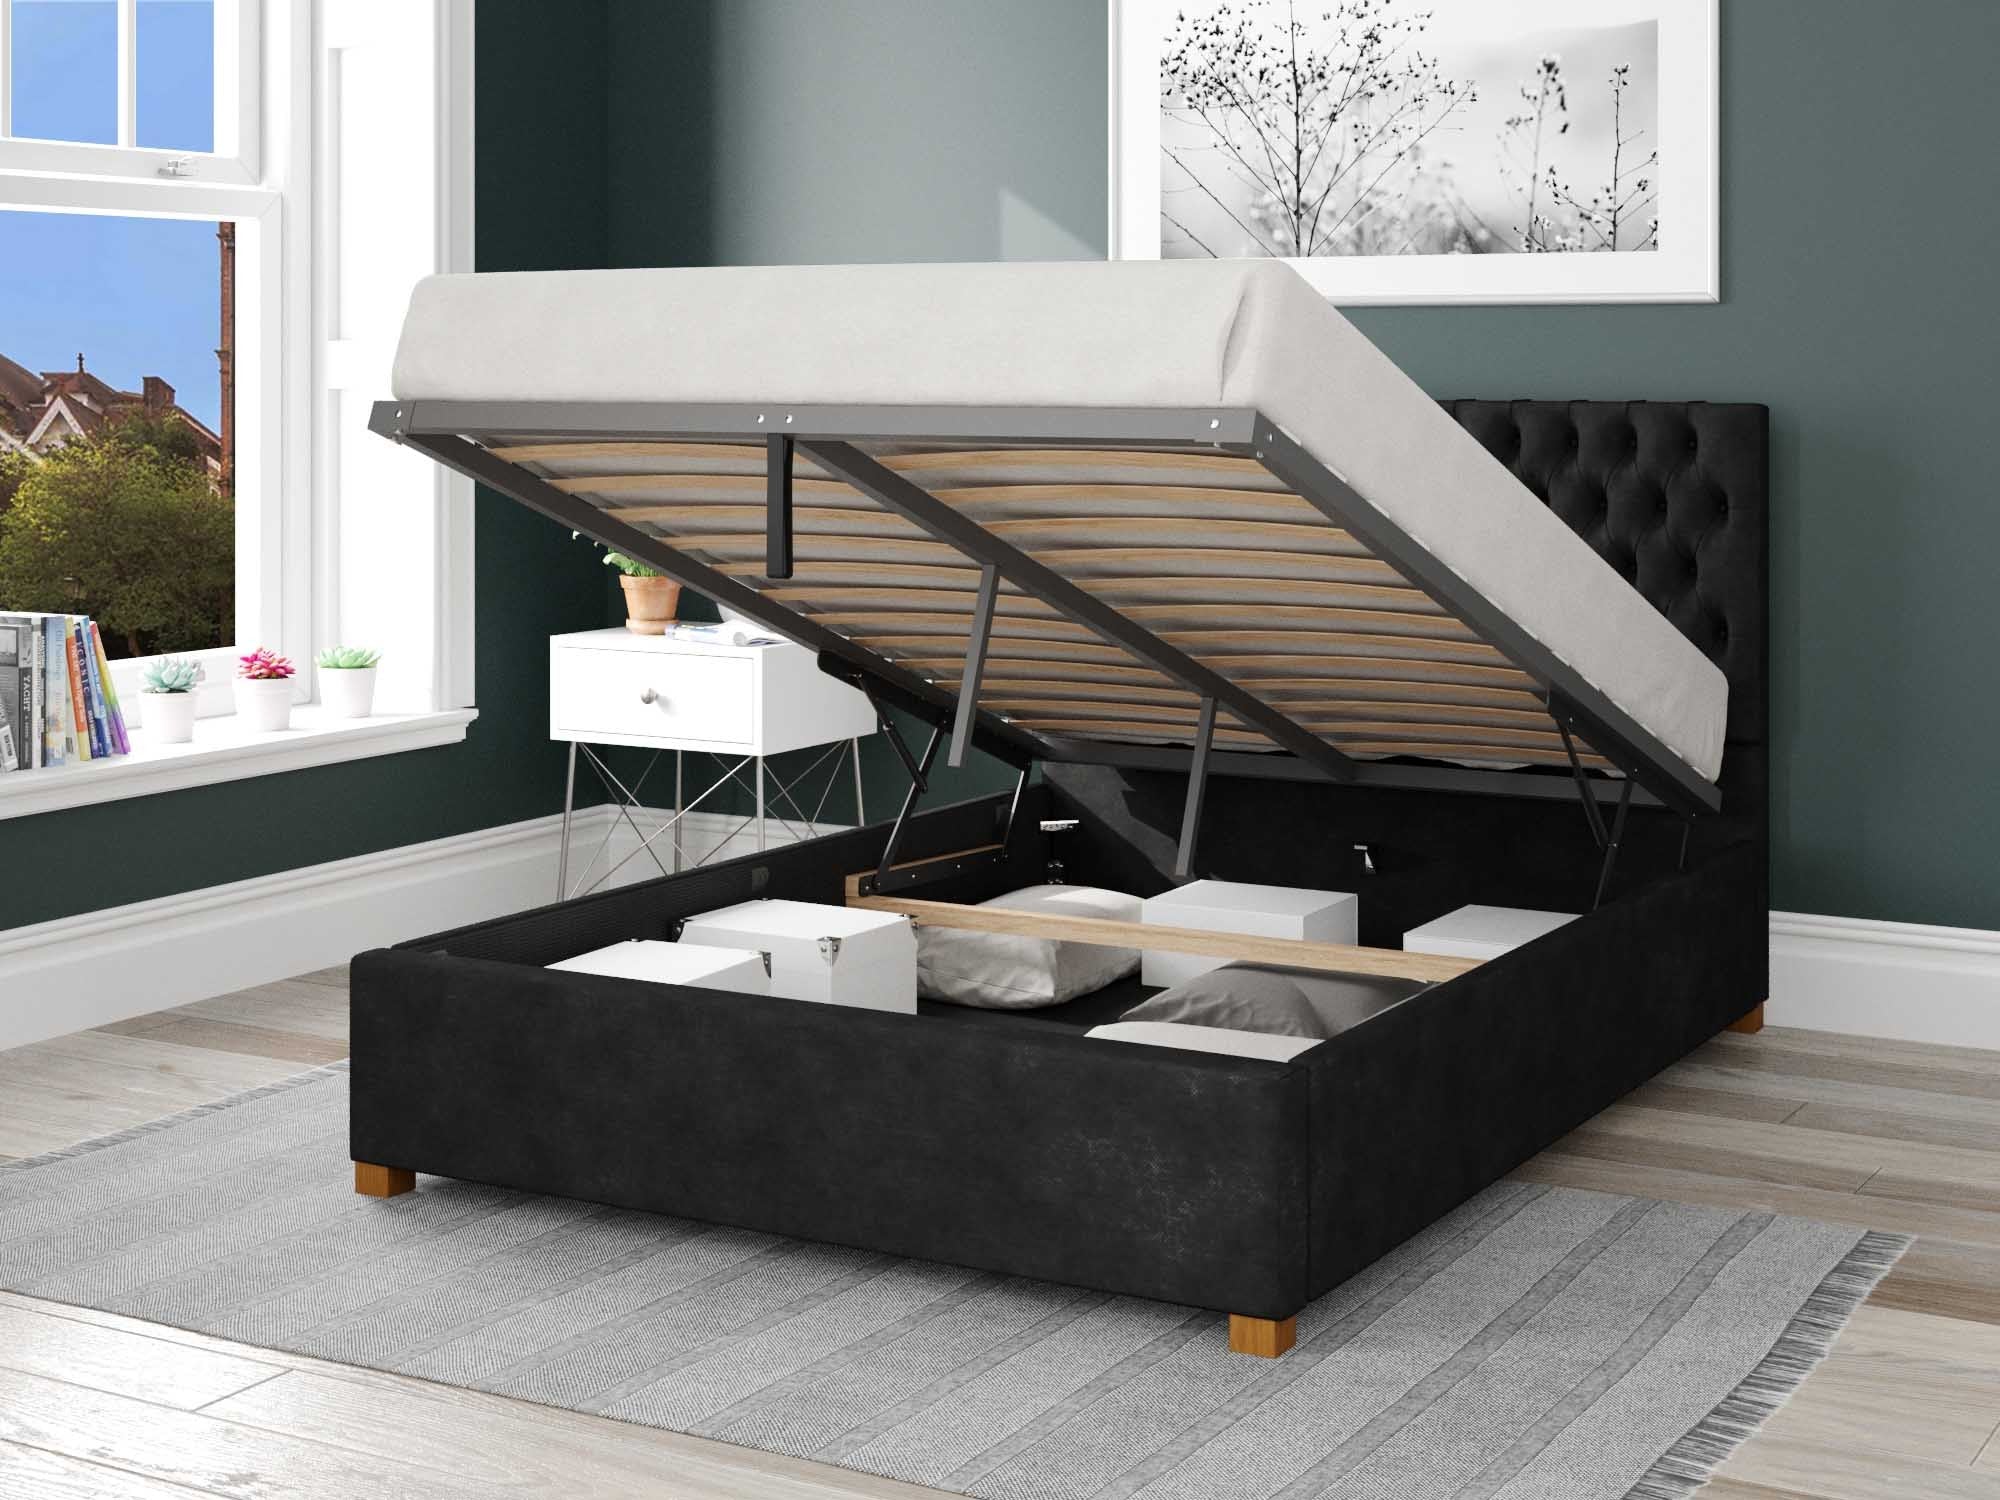 Monroe Upholstered Ottoman Bed - Kimiyo Linen - Charcoal